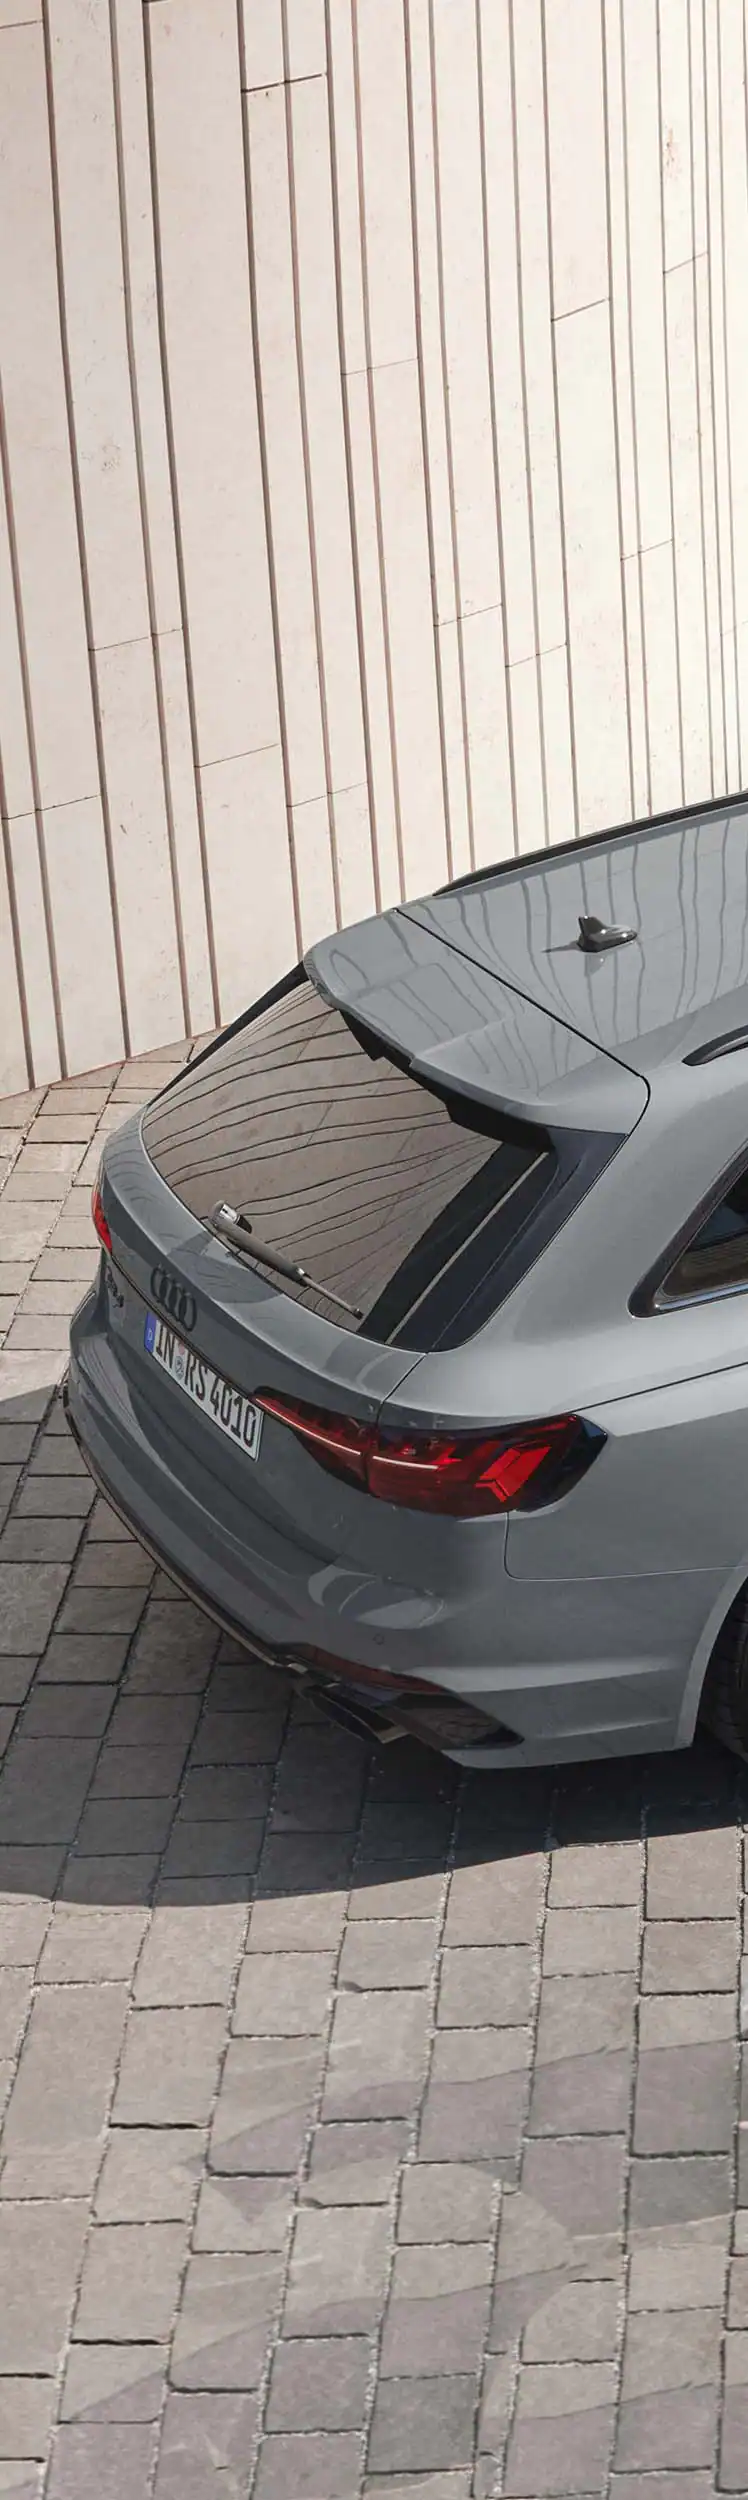 Audi RS 4 Avant side view